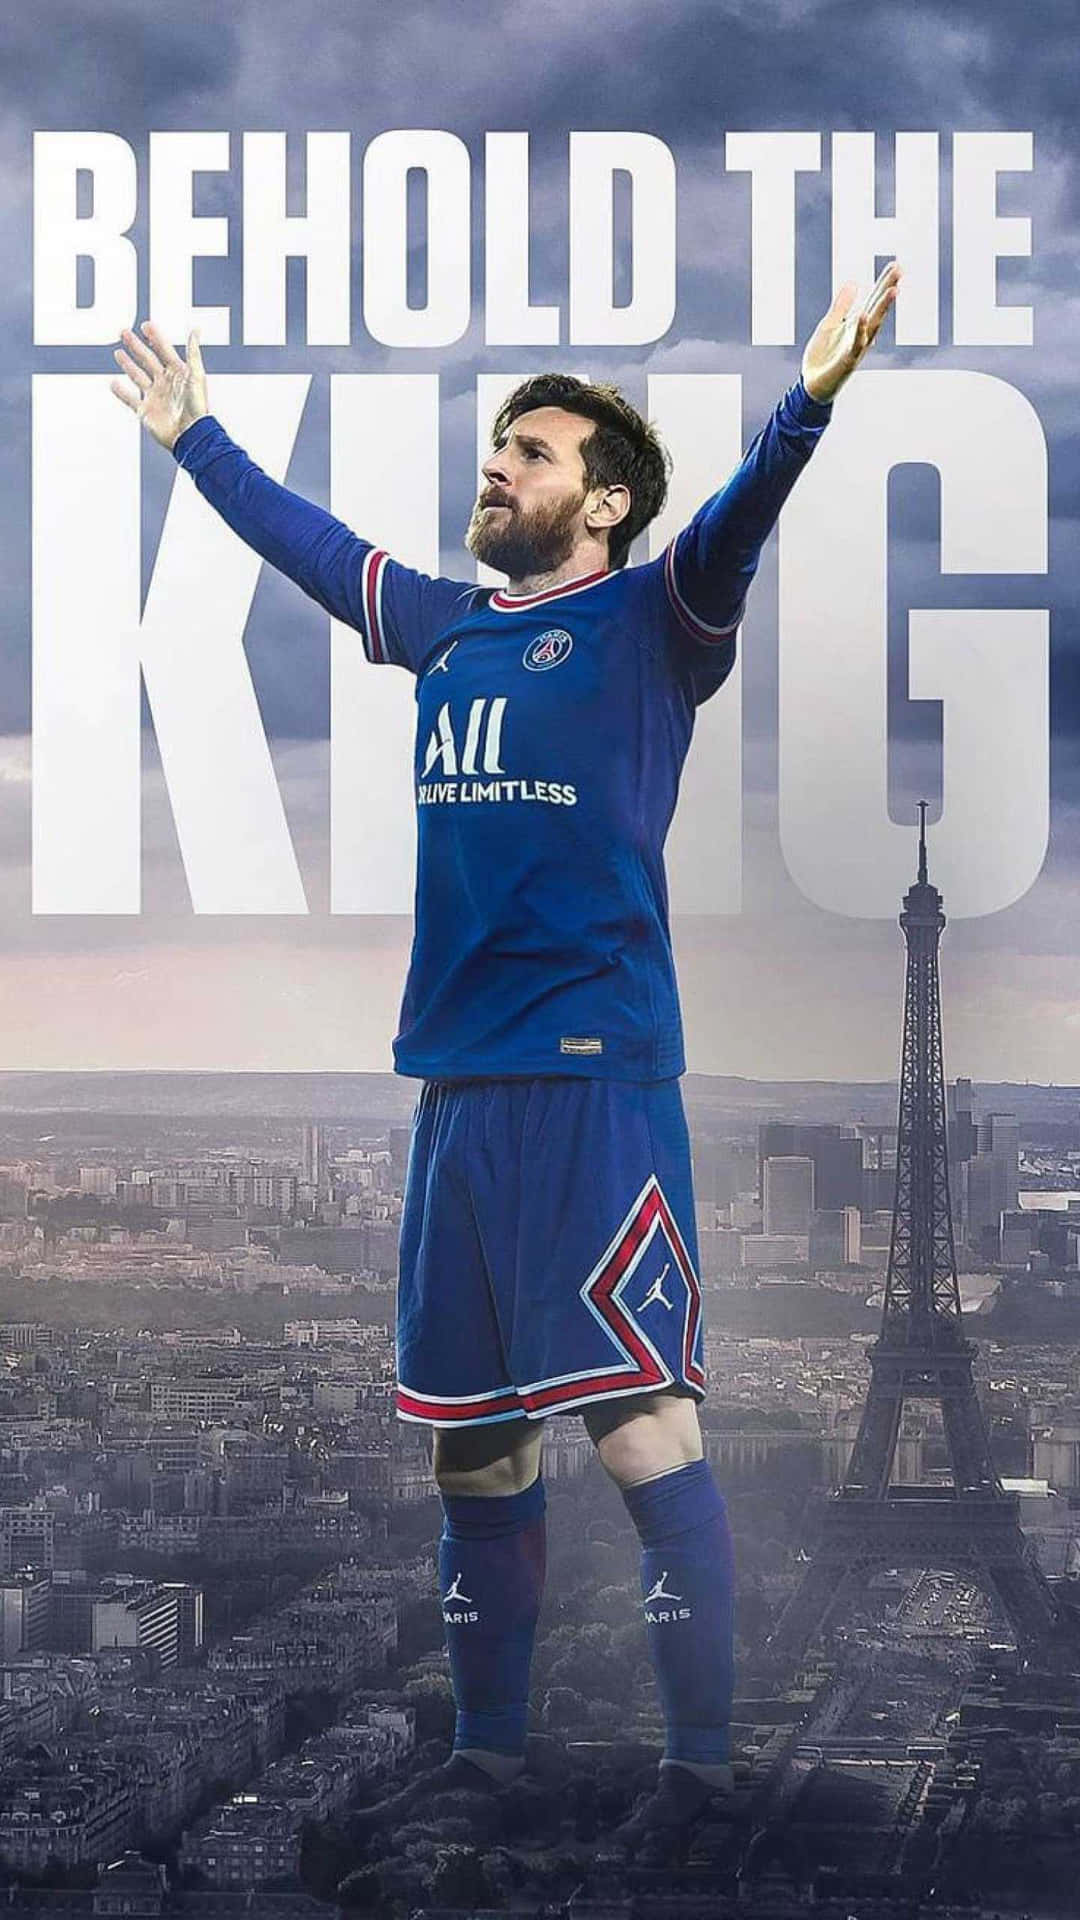 Messi Behold The King Paris2022 Wallpaper